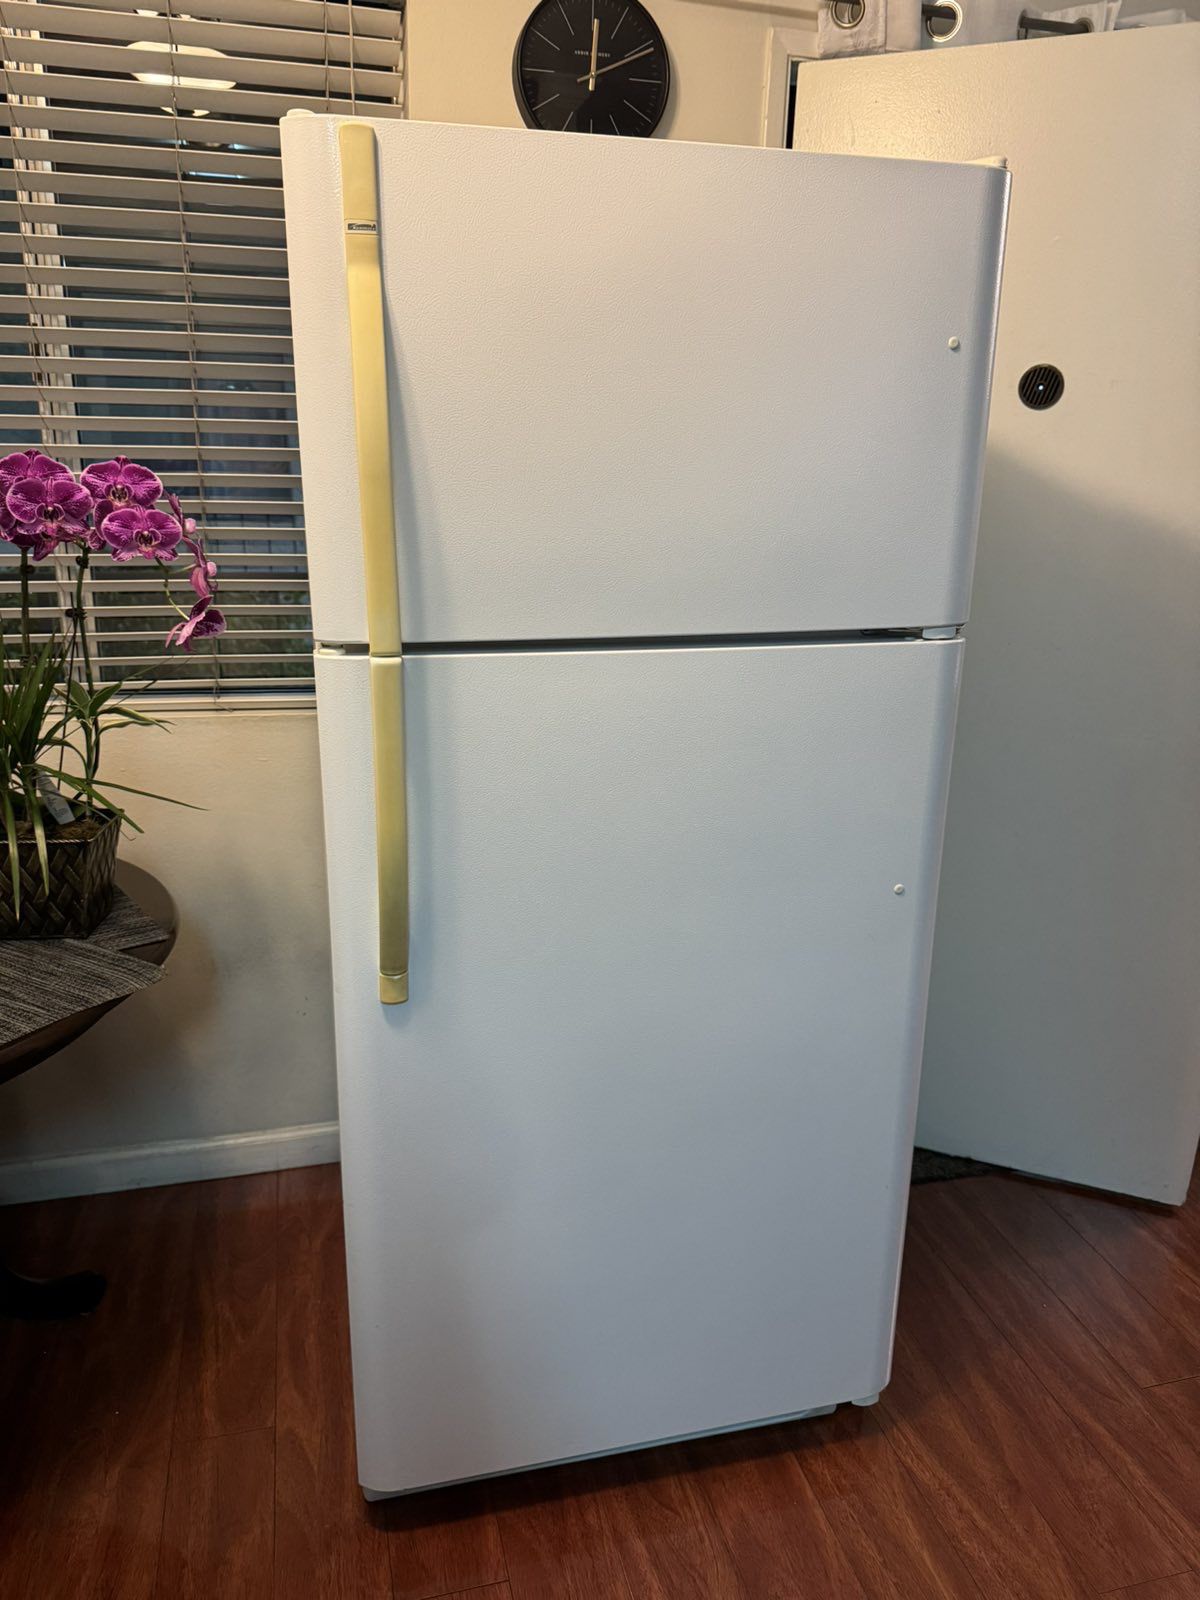 Kenmore refrigerator